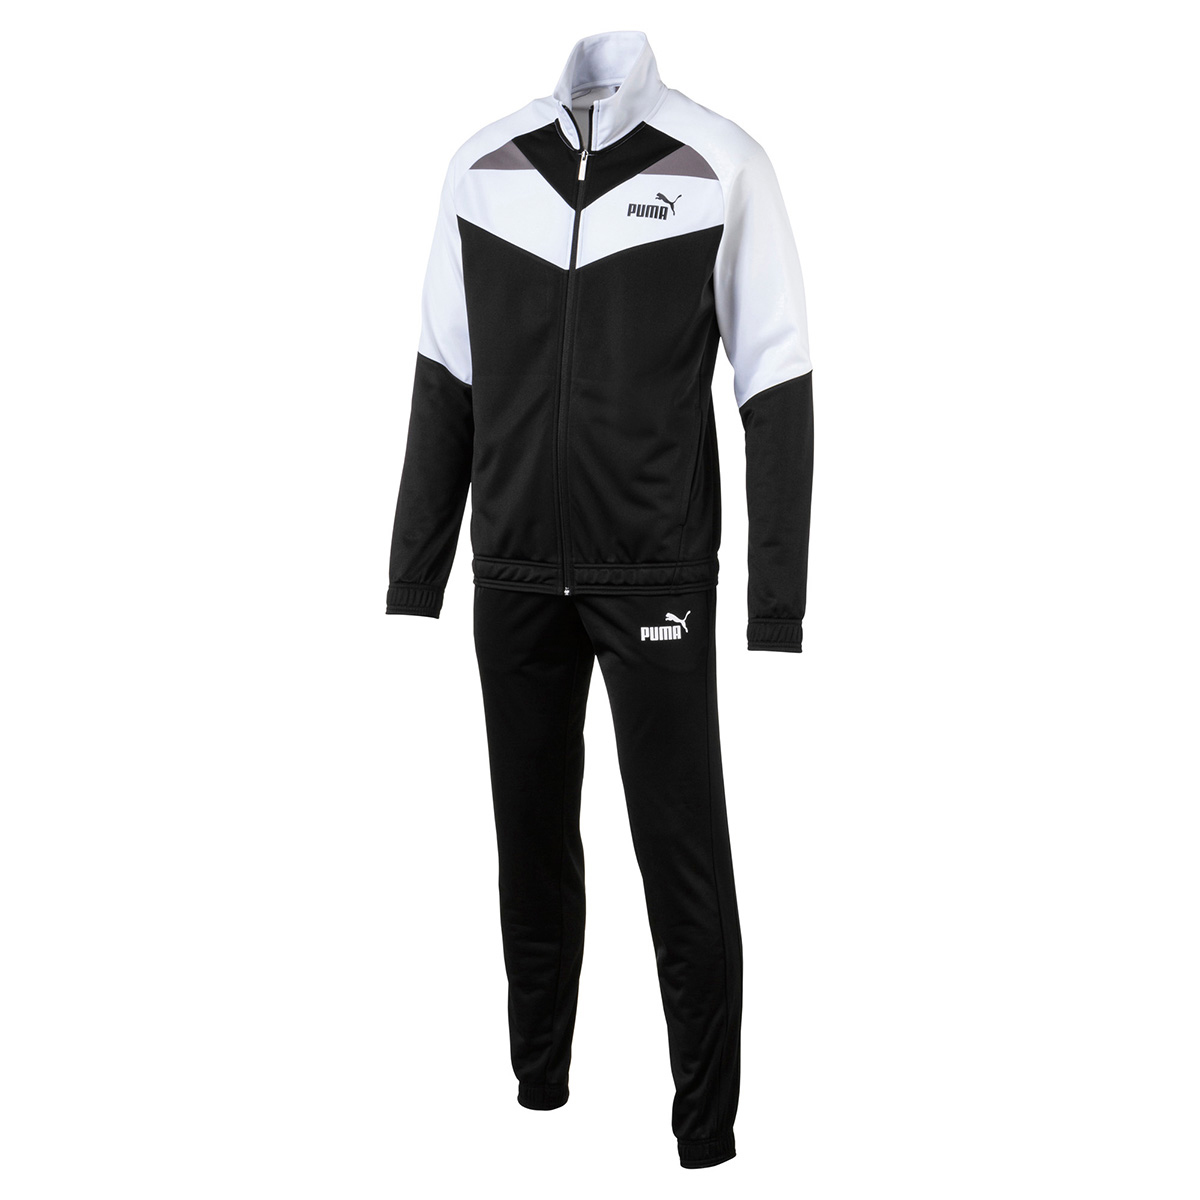 Puma Iconic Tricot Suit CL Trainigsanzug Herren Fußball Sportanzug schwarz 851559 